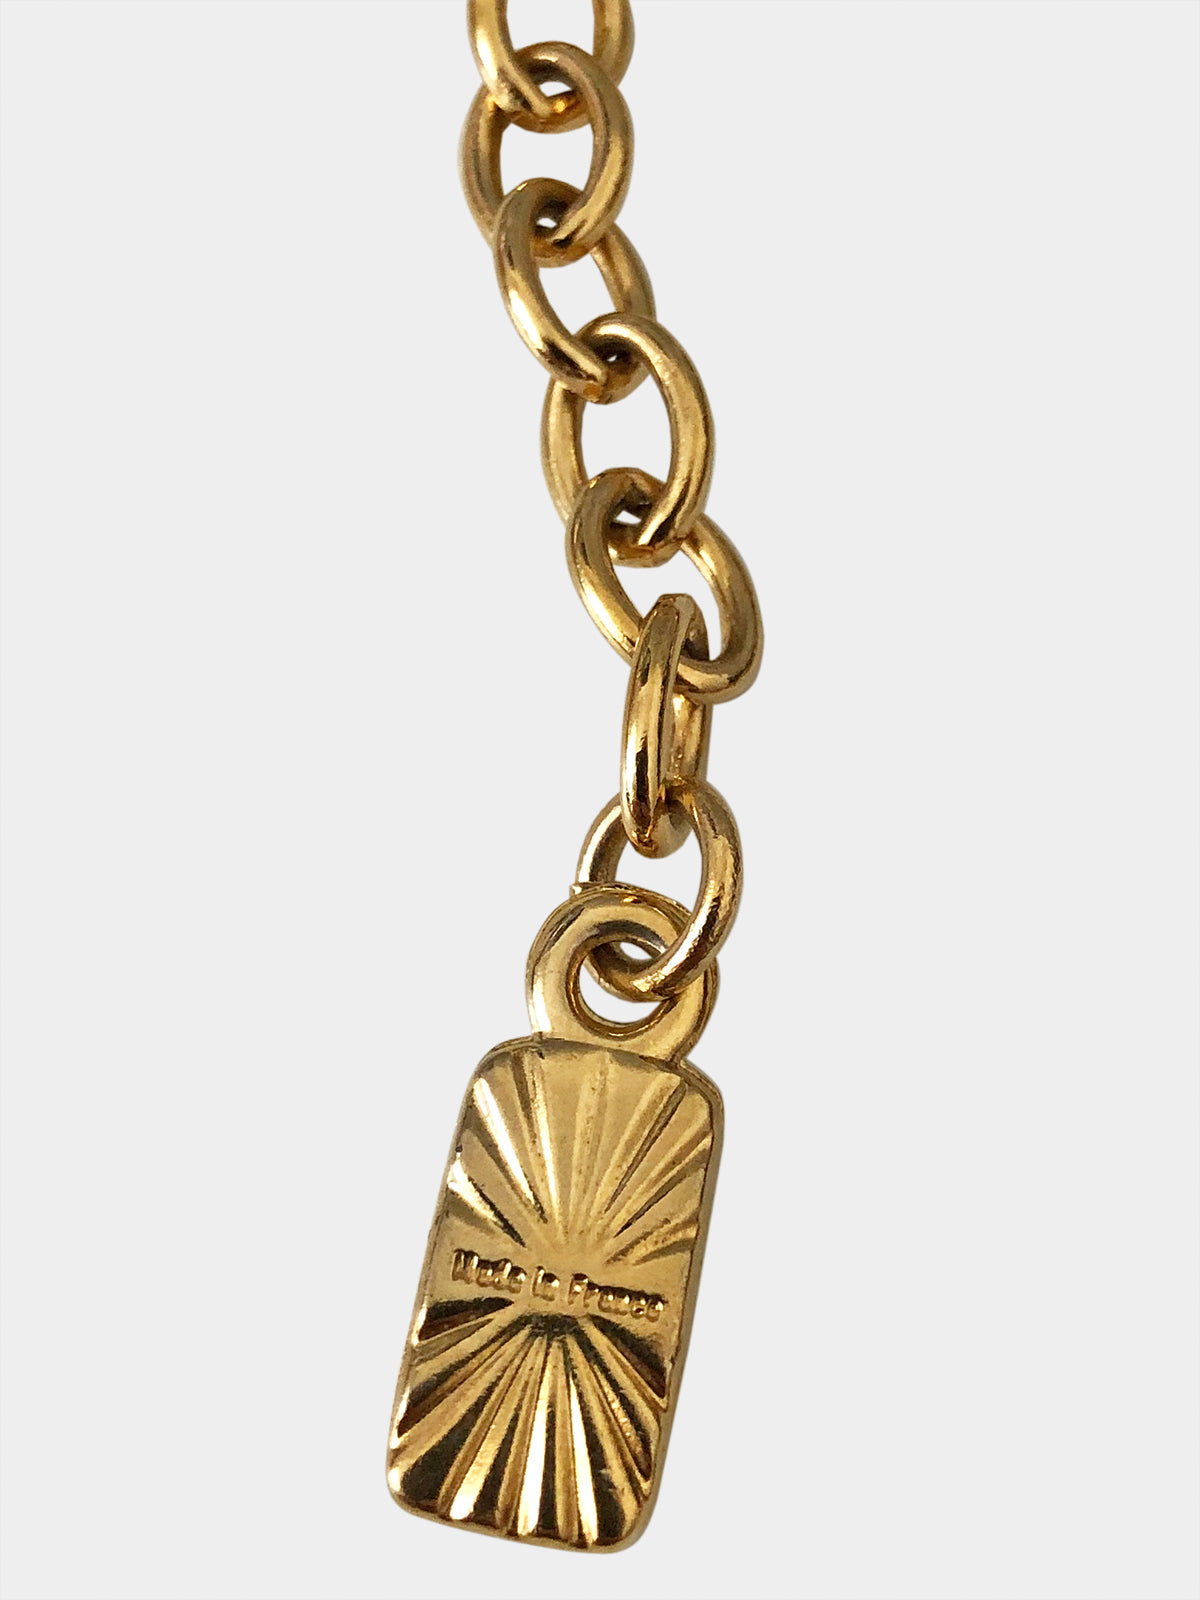 YVES SAINT LAURENT Vintage Textured Disc Necklace, Cuff Bracelet & Earrings Jewelry Set